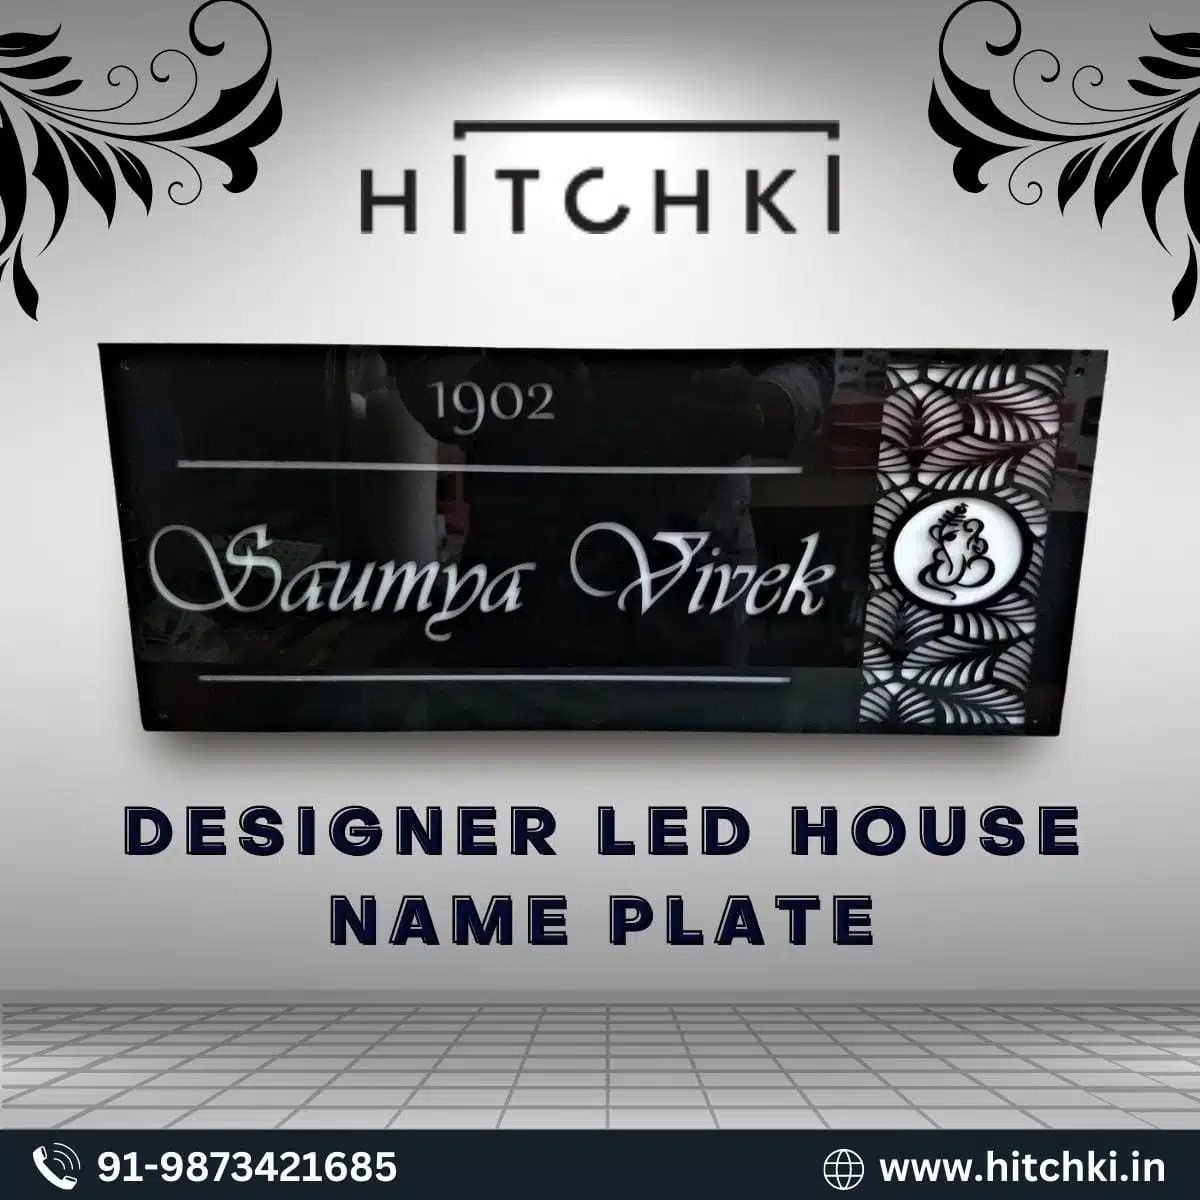 Shop For Designer LED House Name Plate From Hitchki